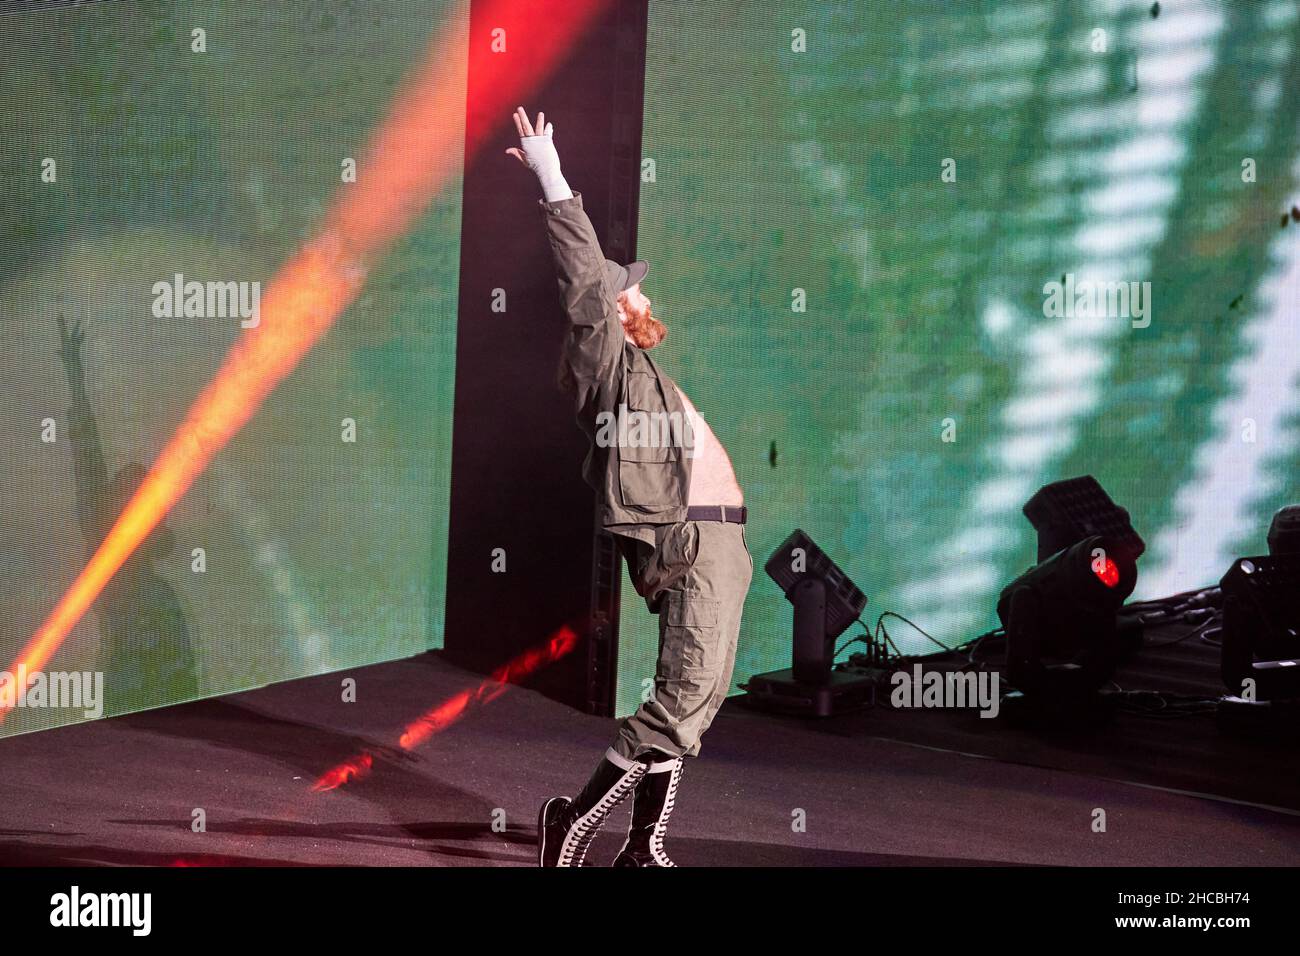 Tampa, Florida, USA. 26th Dec. 2021. Kofi Kingston vs Sami Zayn during WWE fight at Amalie Arena. Credit: Yaroslav Sabitov/YES Market Media/Alamy Live News Stock Photo